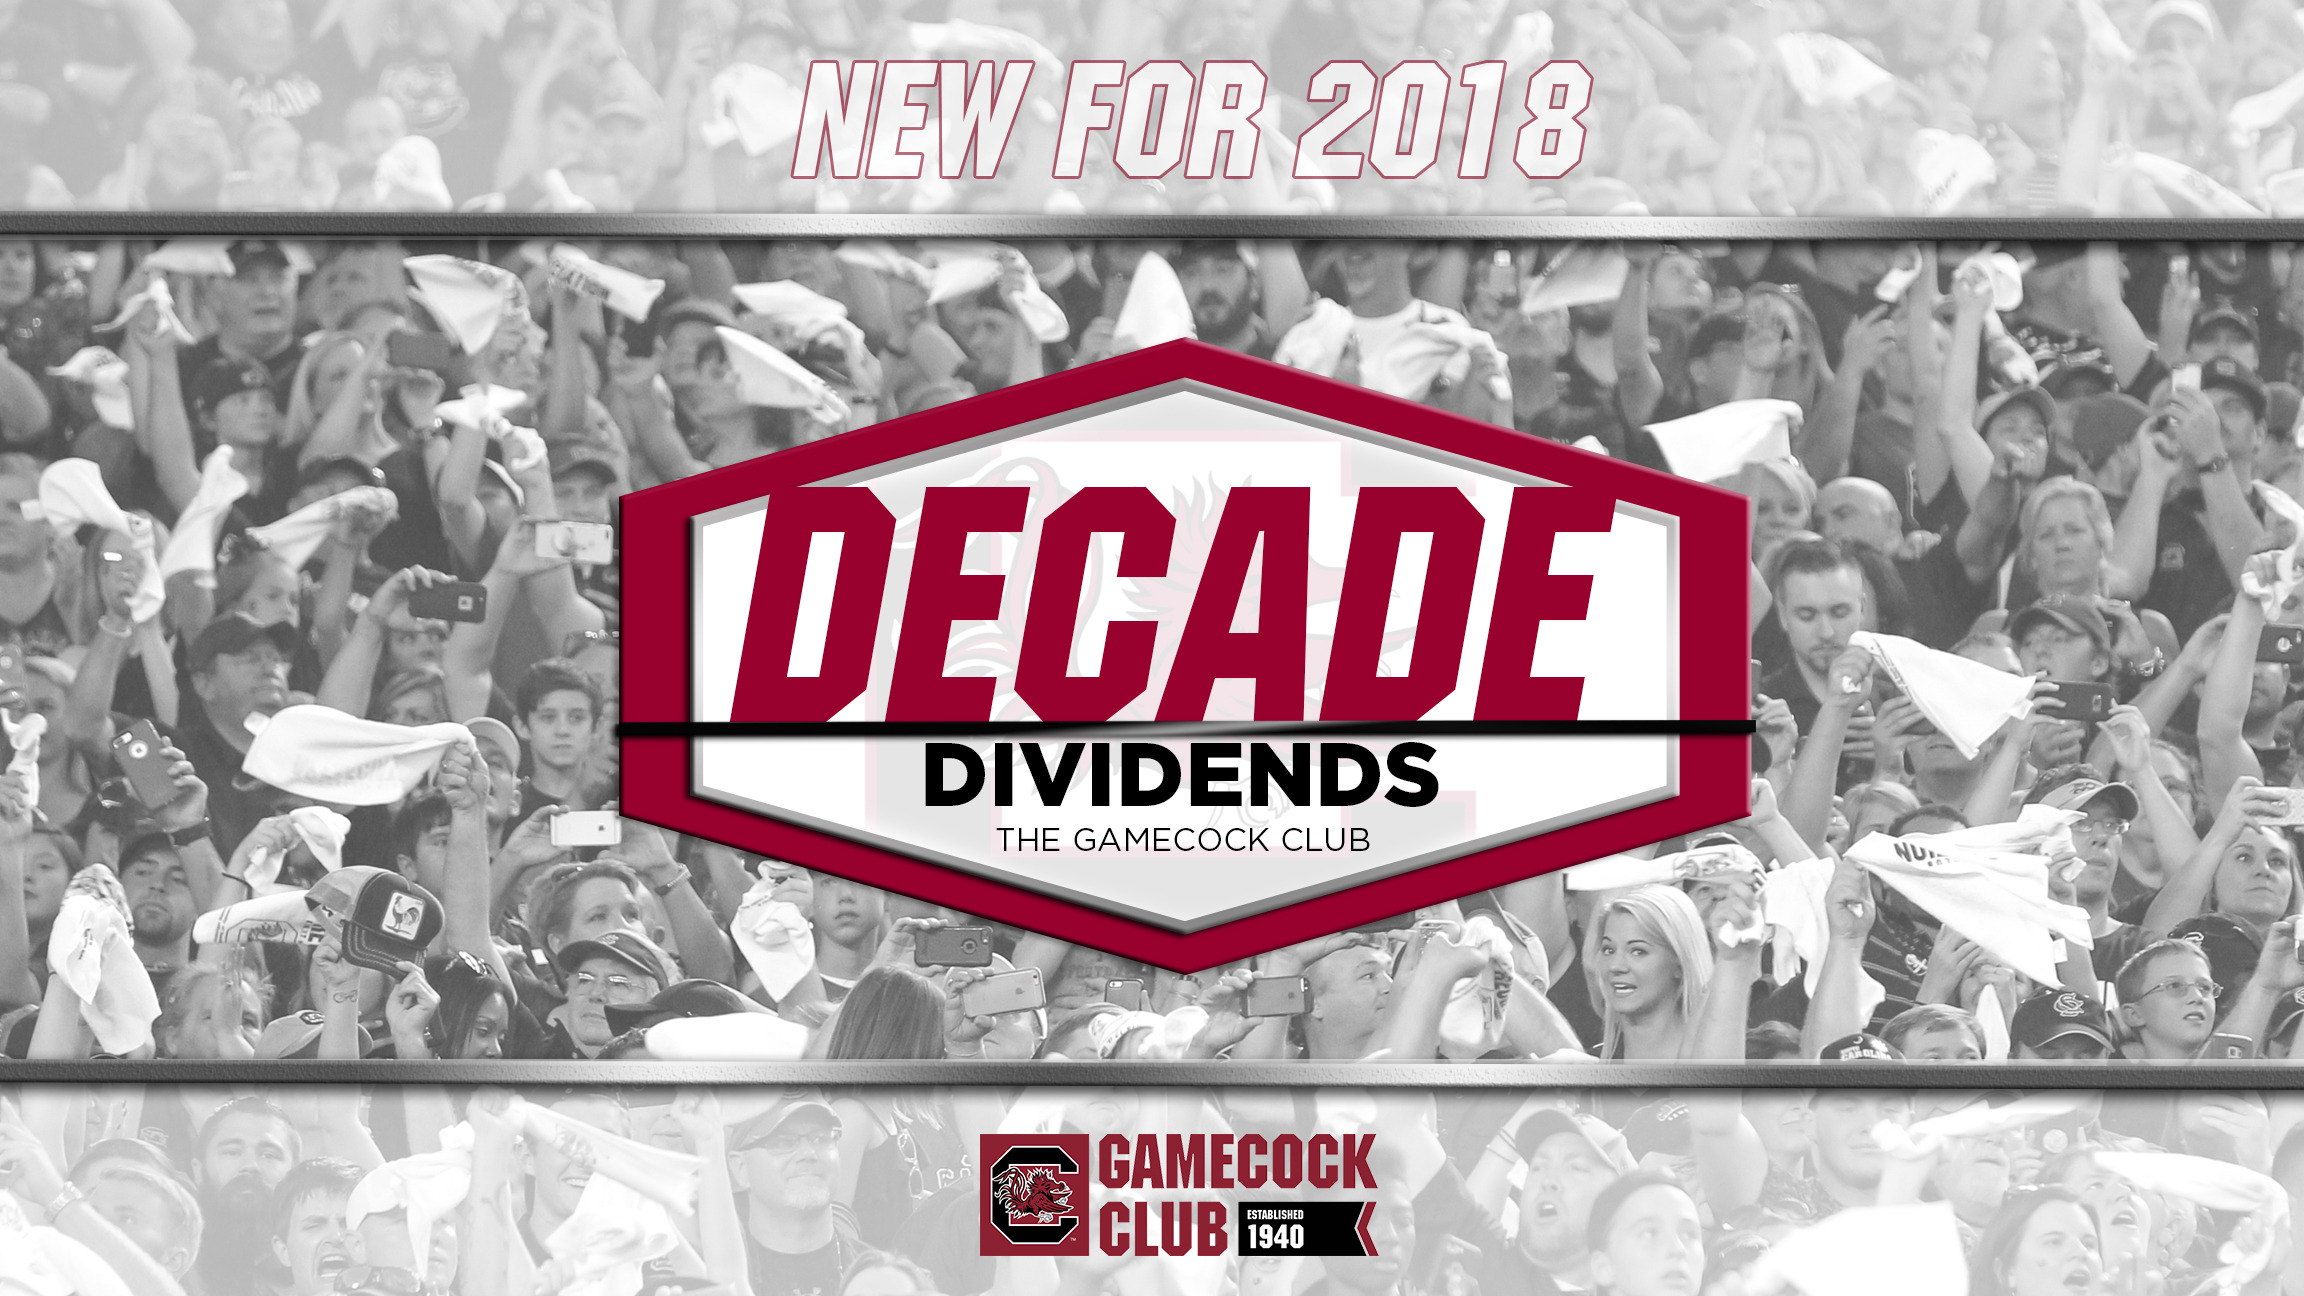 The Gamecock Club Announces Decade Dividends Plan